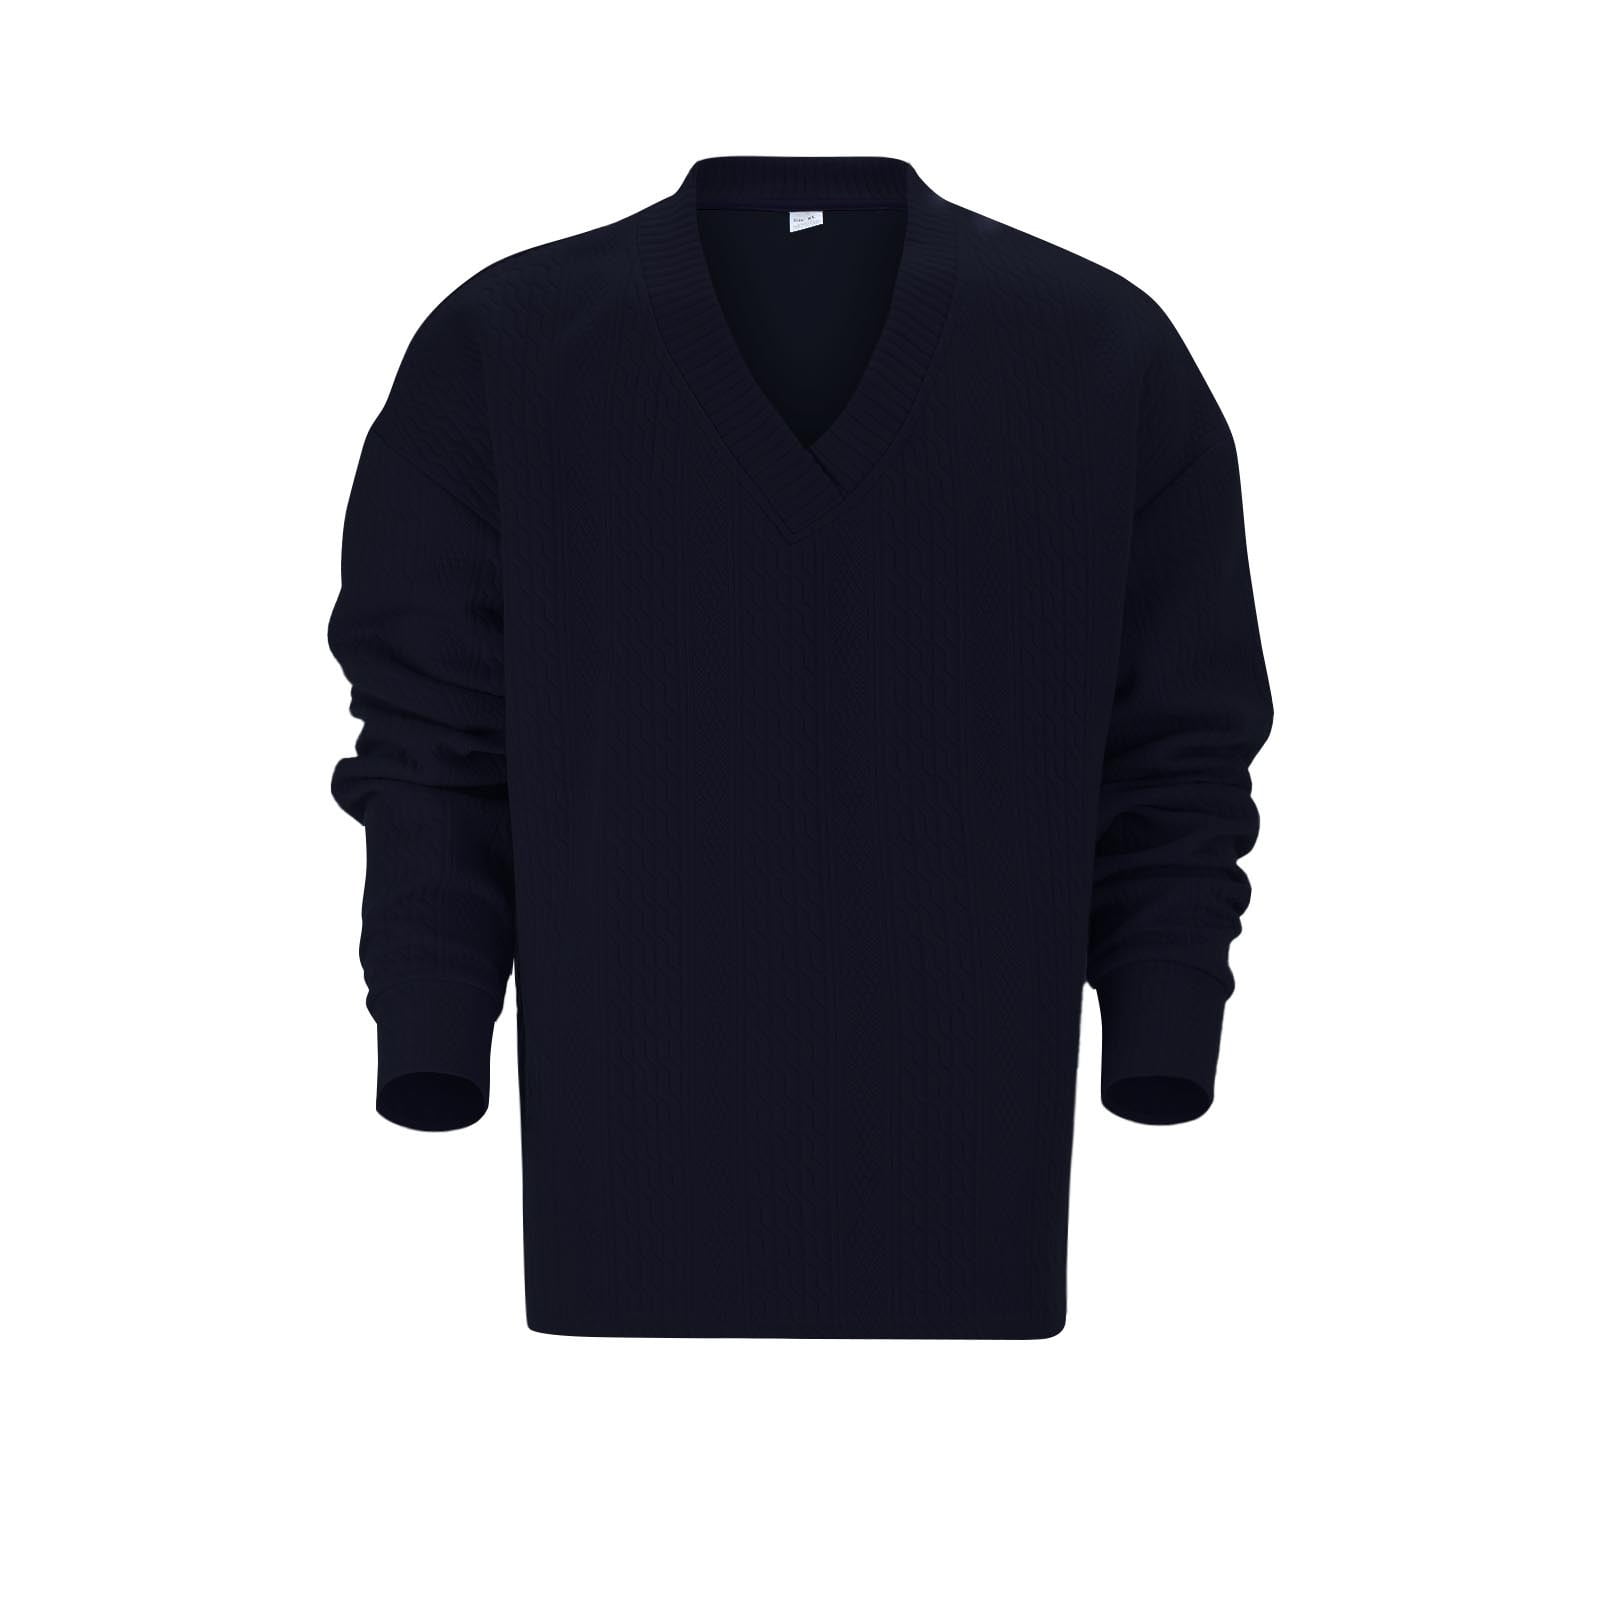 Mens Casual Sweater Jacquard Knit Men's Loose Long Sleeve V Neck T ...